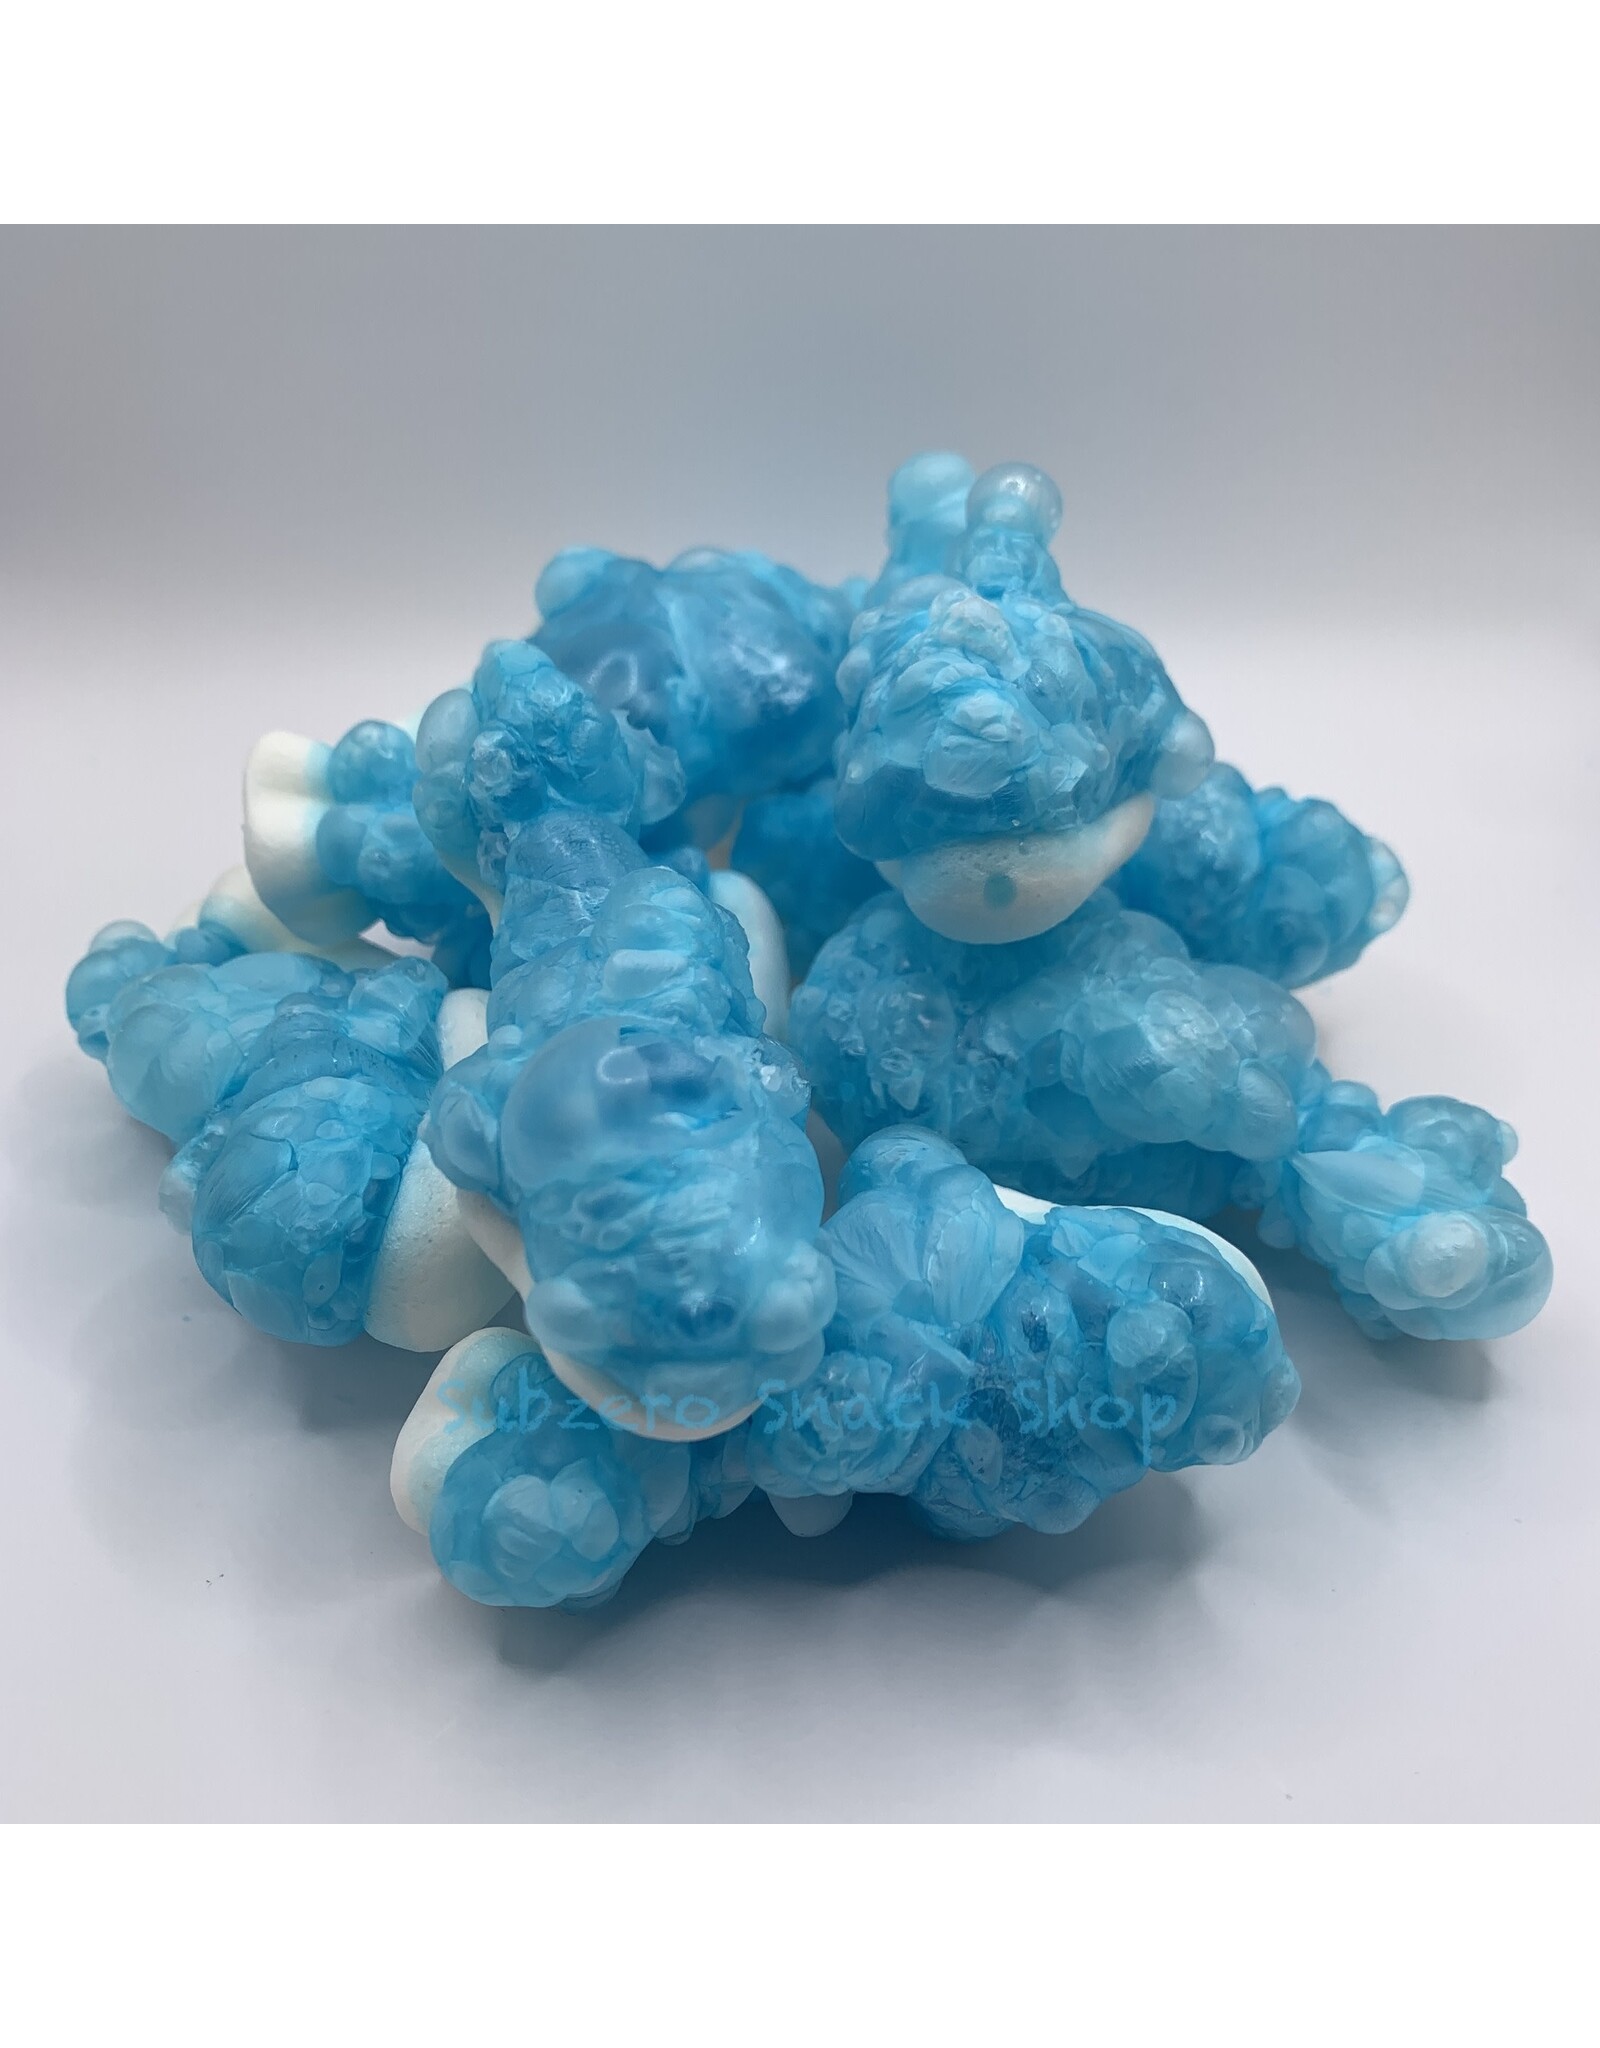 Subzero Snack Shop Freeze Dried Blue Whale Gummies